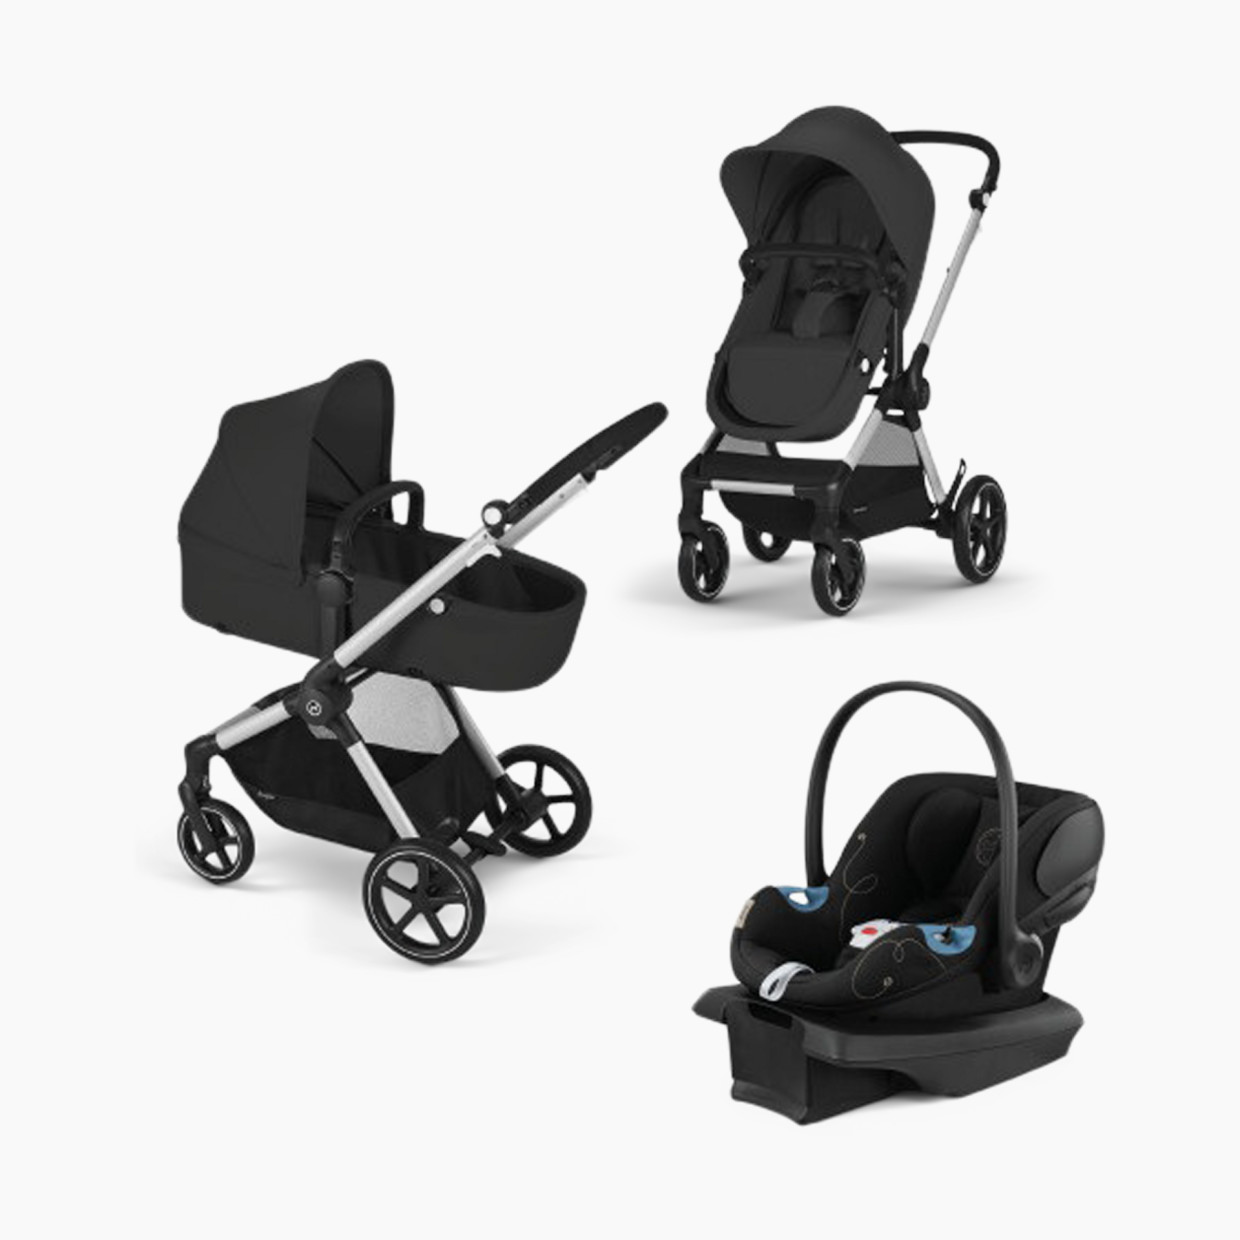 Cybex EOS 5-in-1 Travel System Stroller + Lightweight Aton G Infant Car Seat - Moon Black.